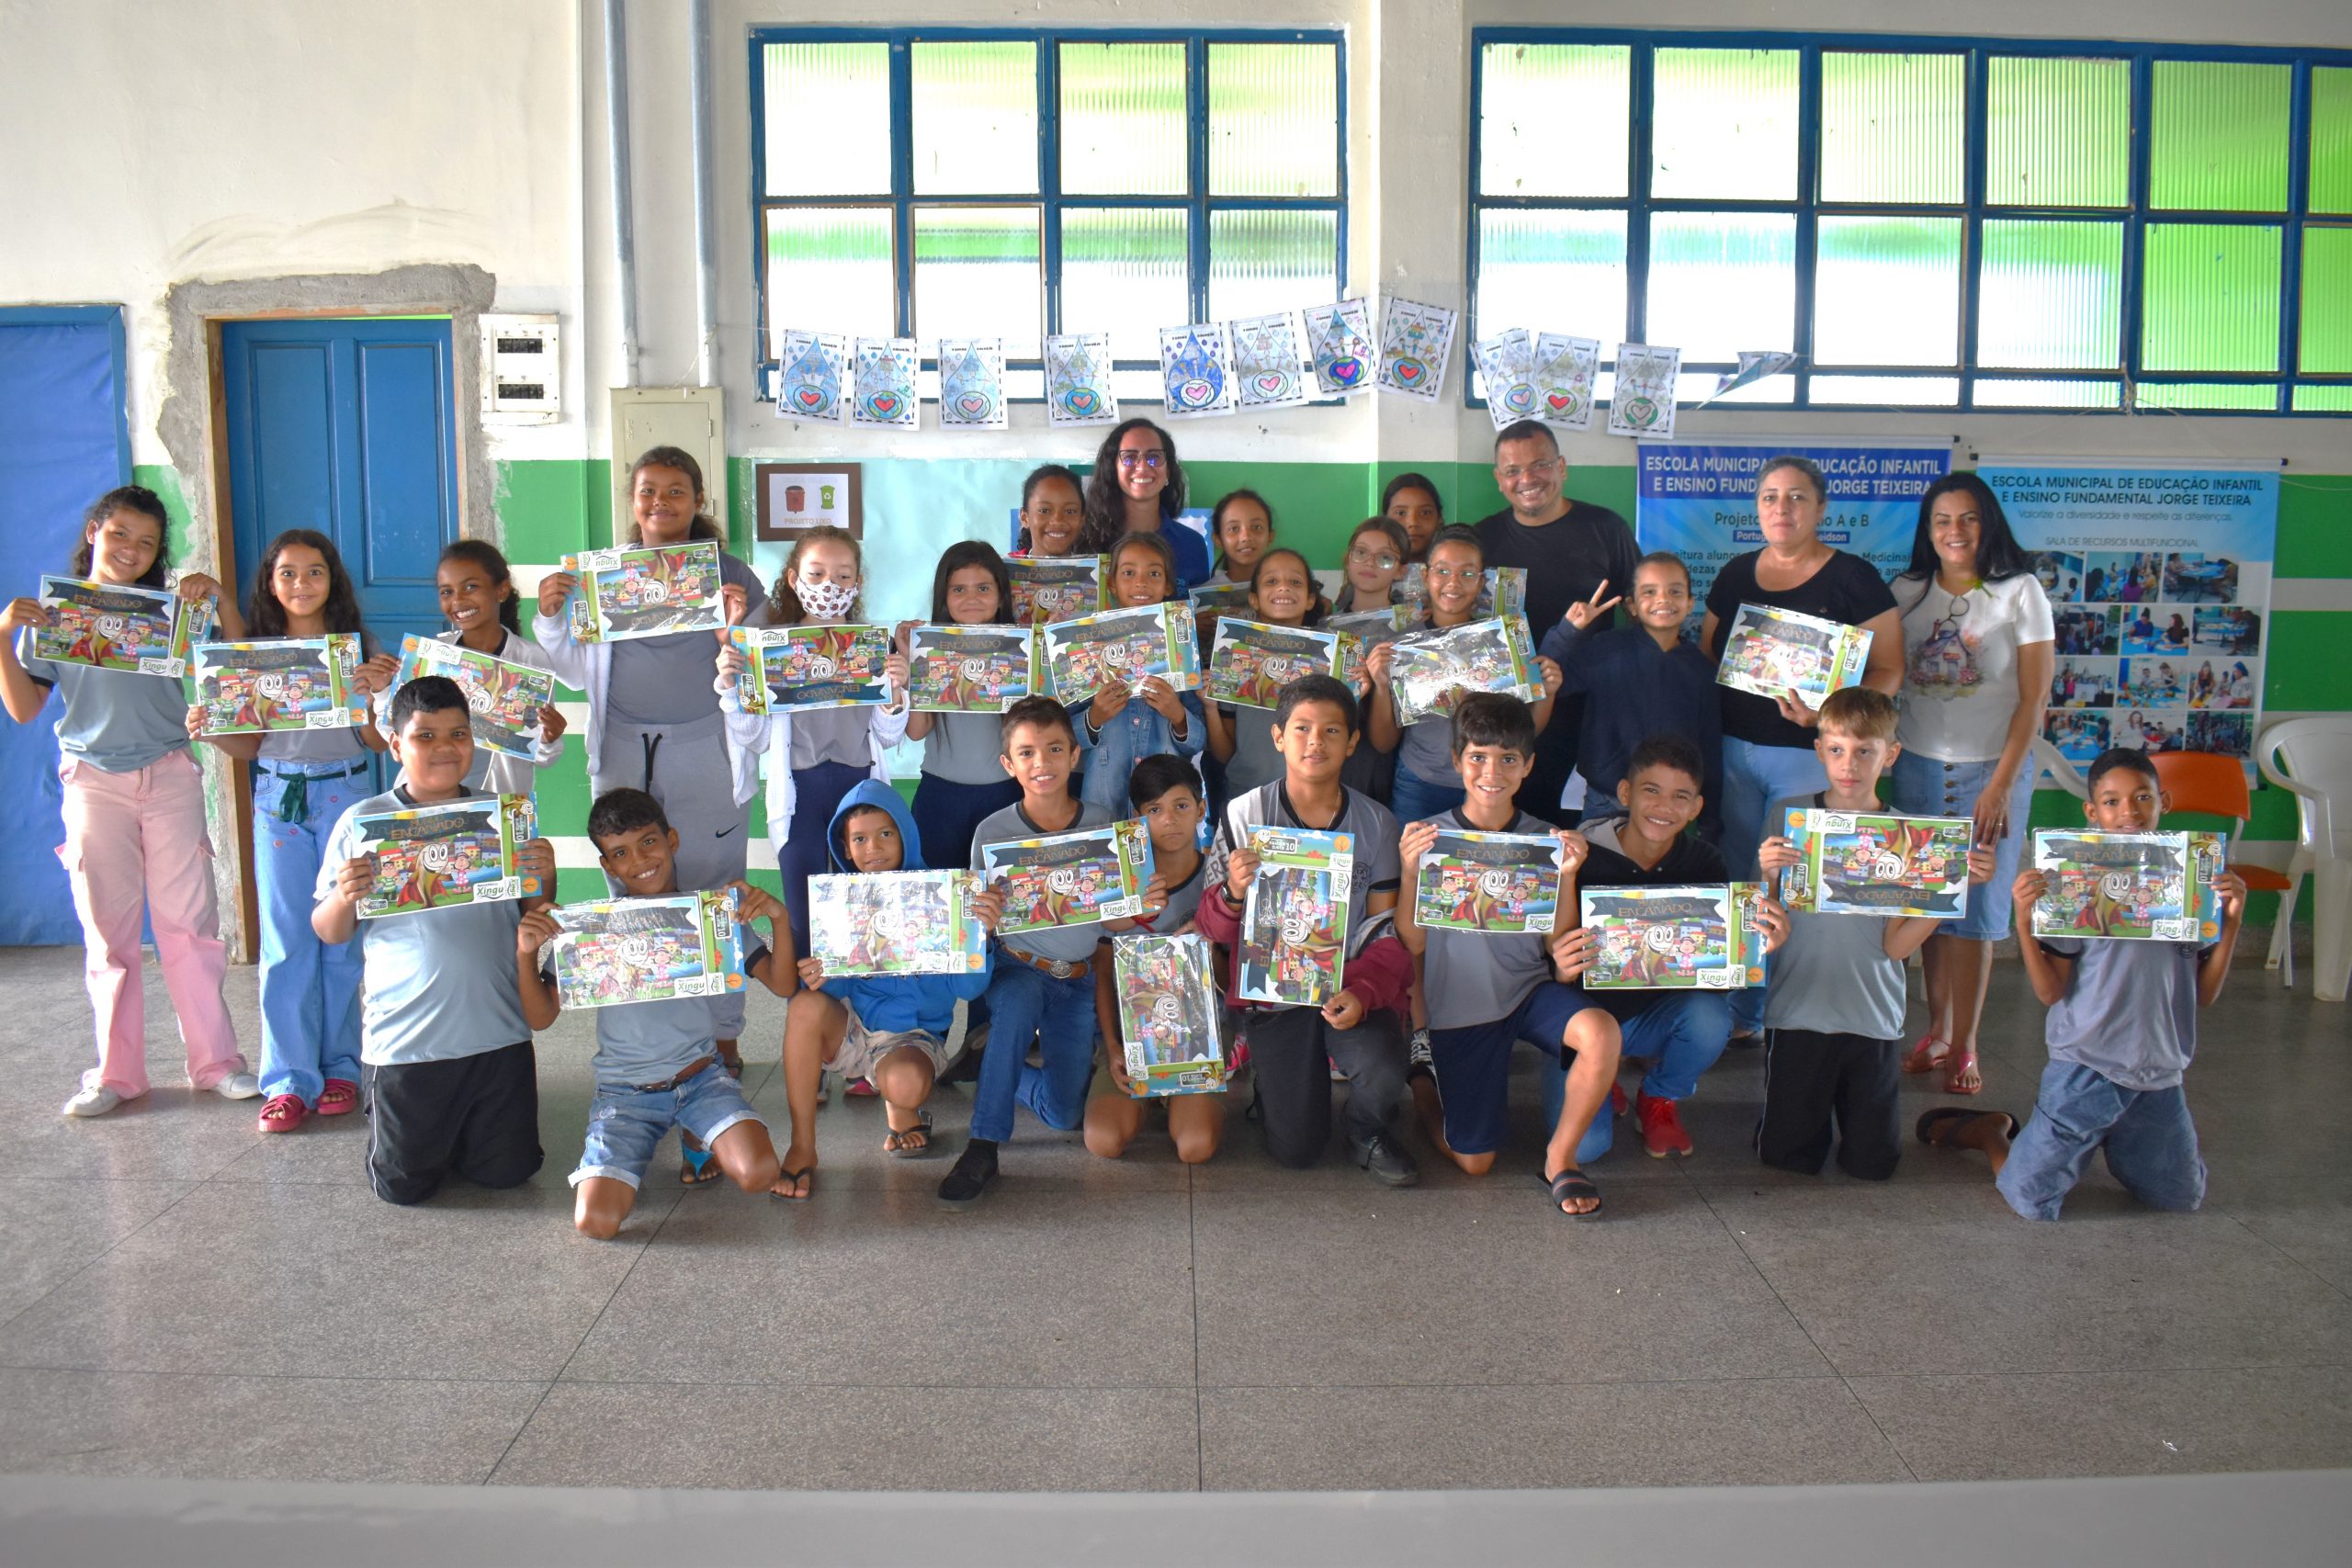 Ariquemes: Alunos da Escola Municipal Jorge Teixeira participam do programa Saúde Nota 10